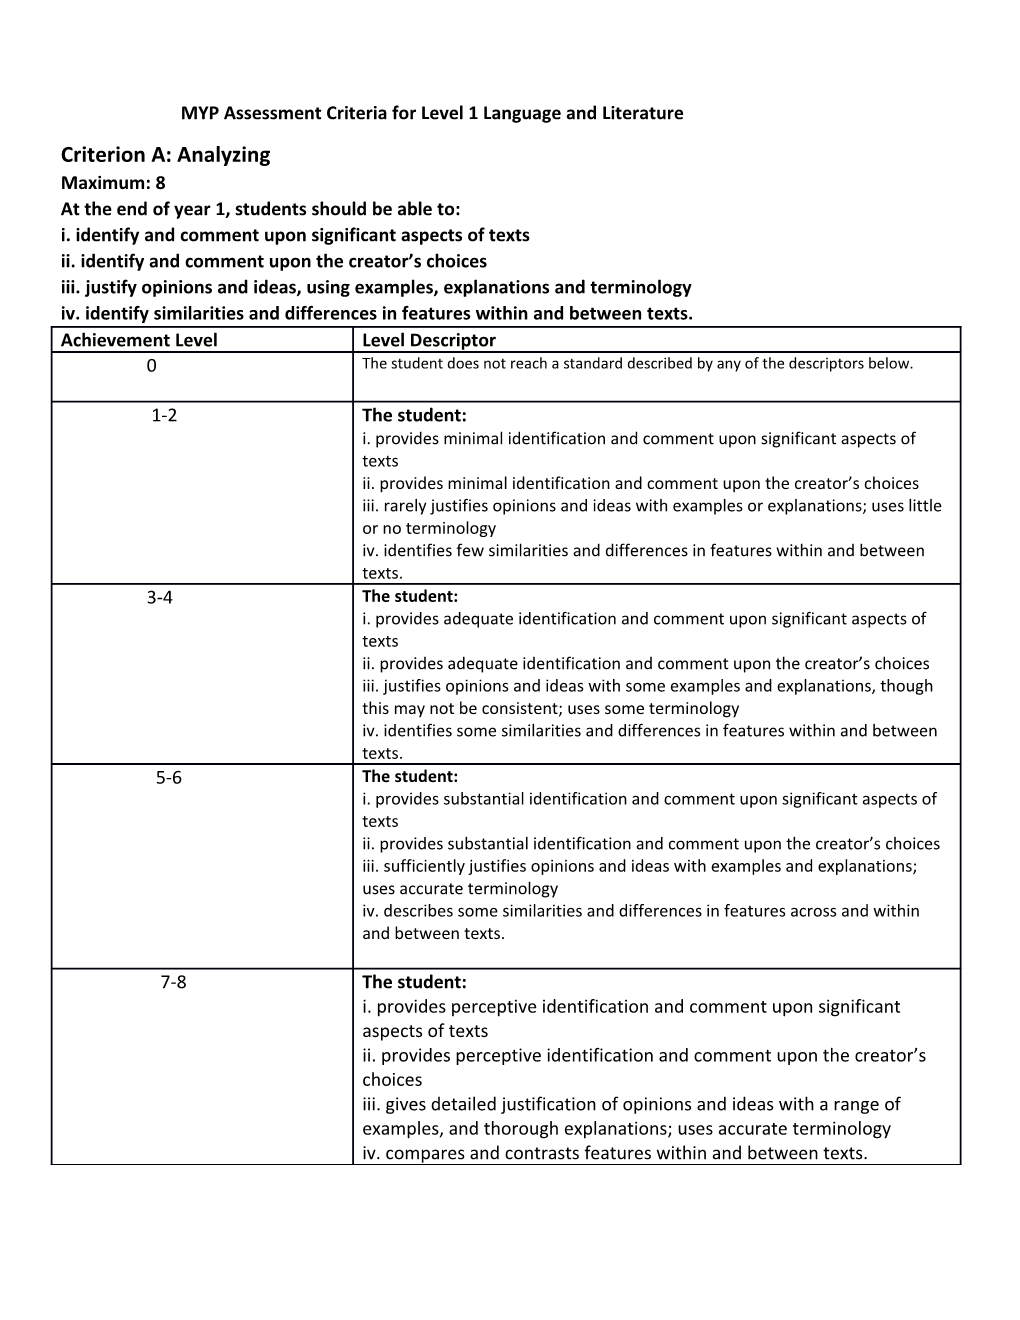 MYP Assessment Criteria for Level 1 Language and Literature